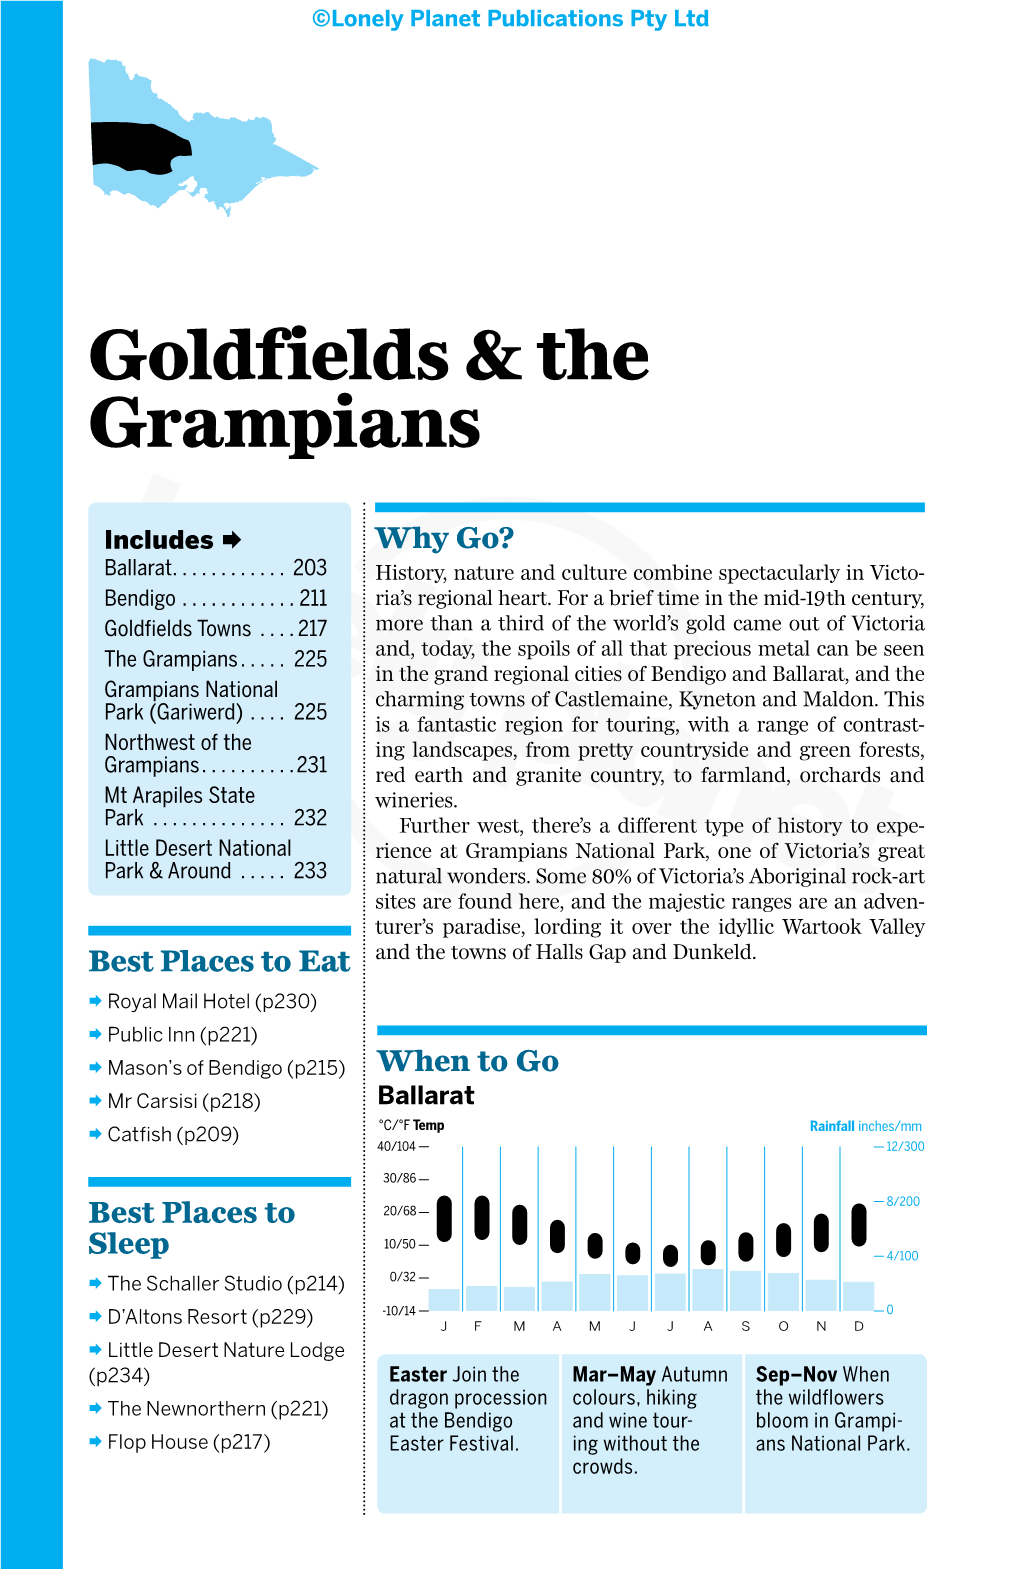 Goldfields & the Grampians